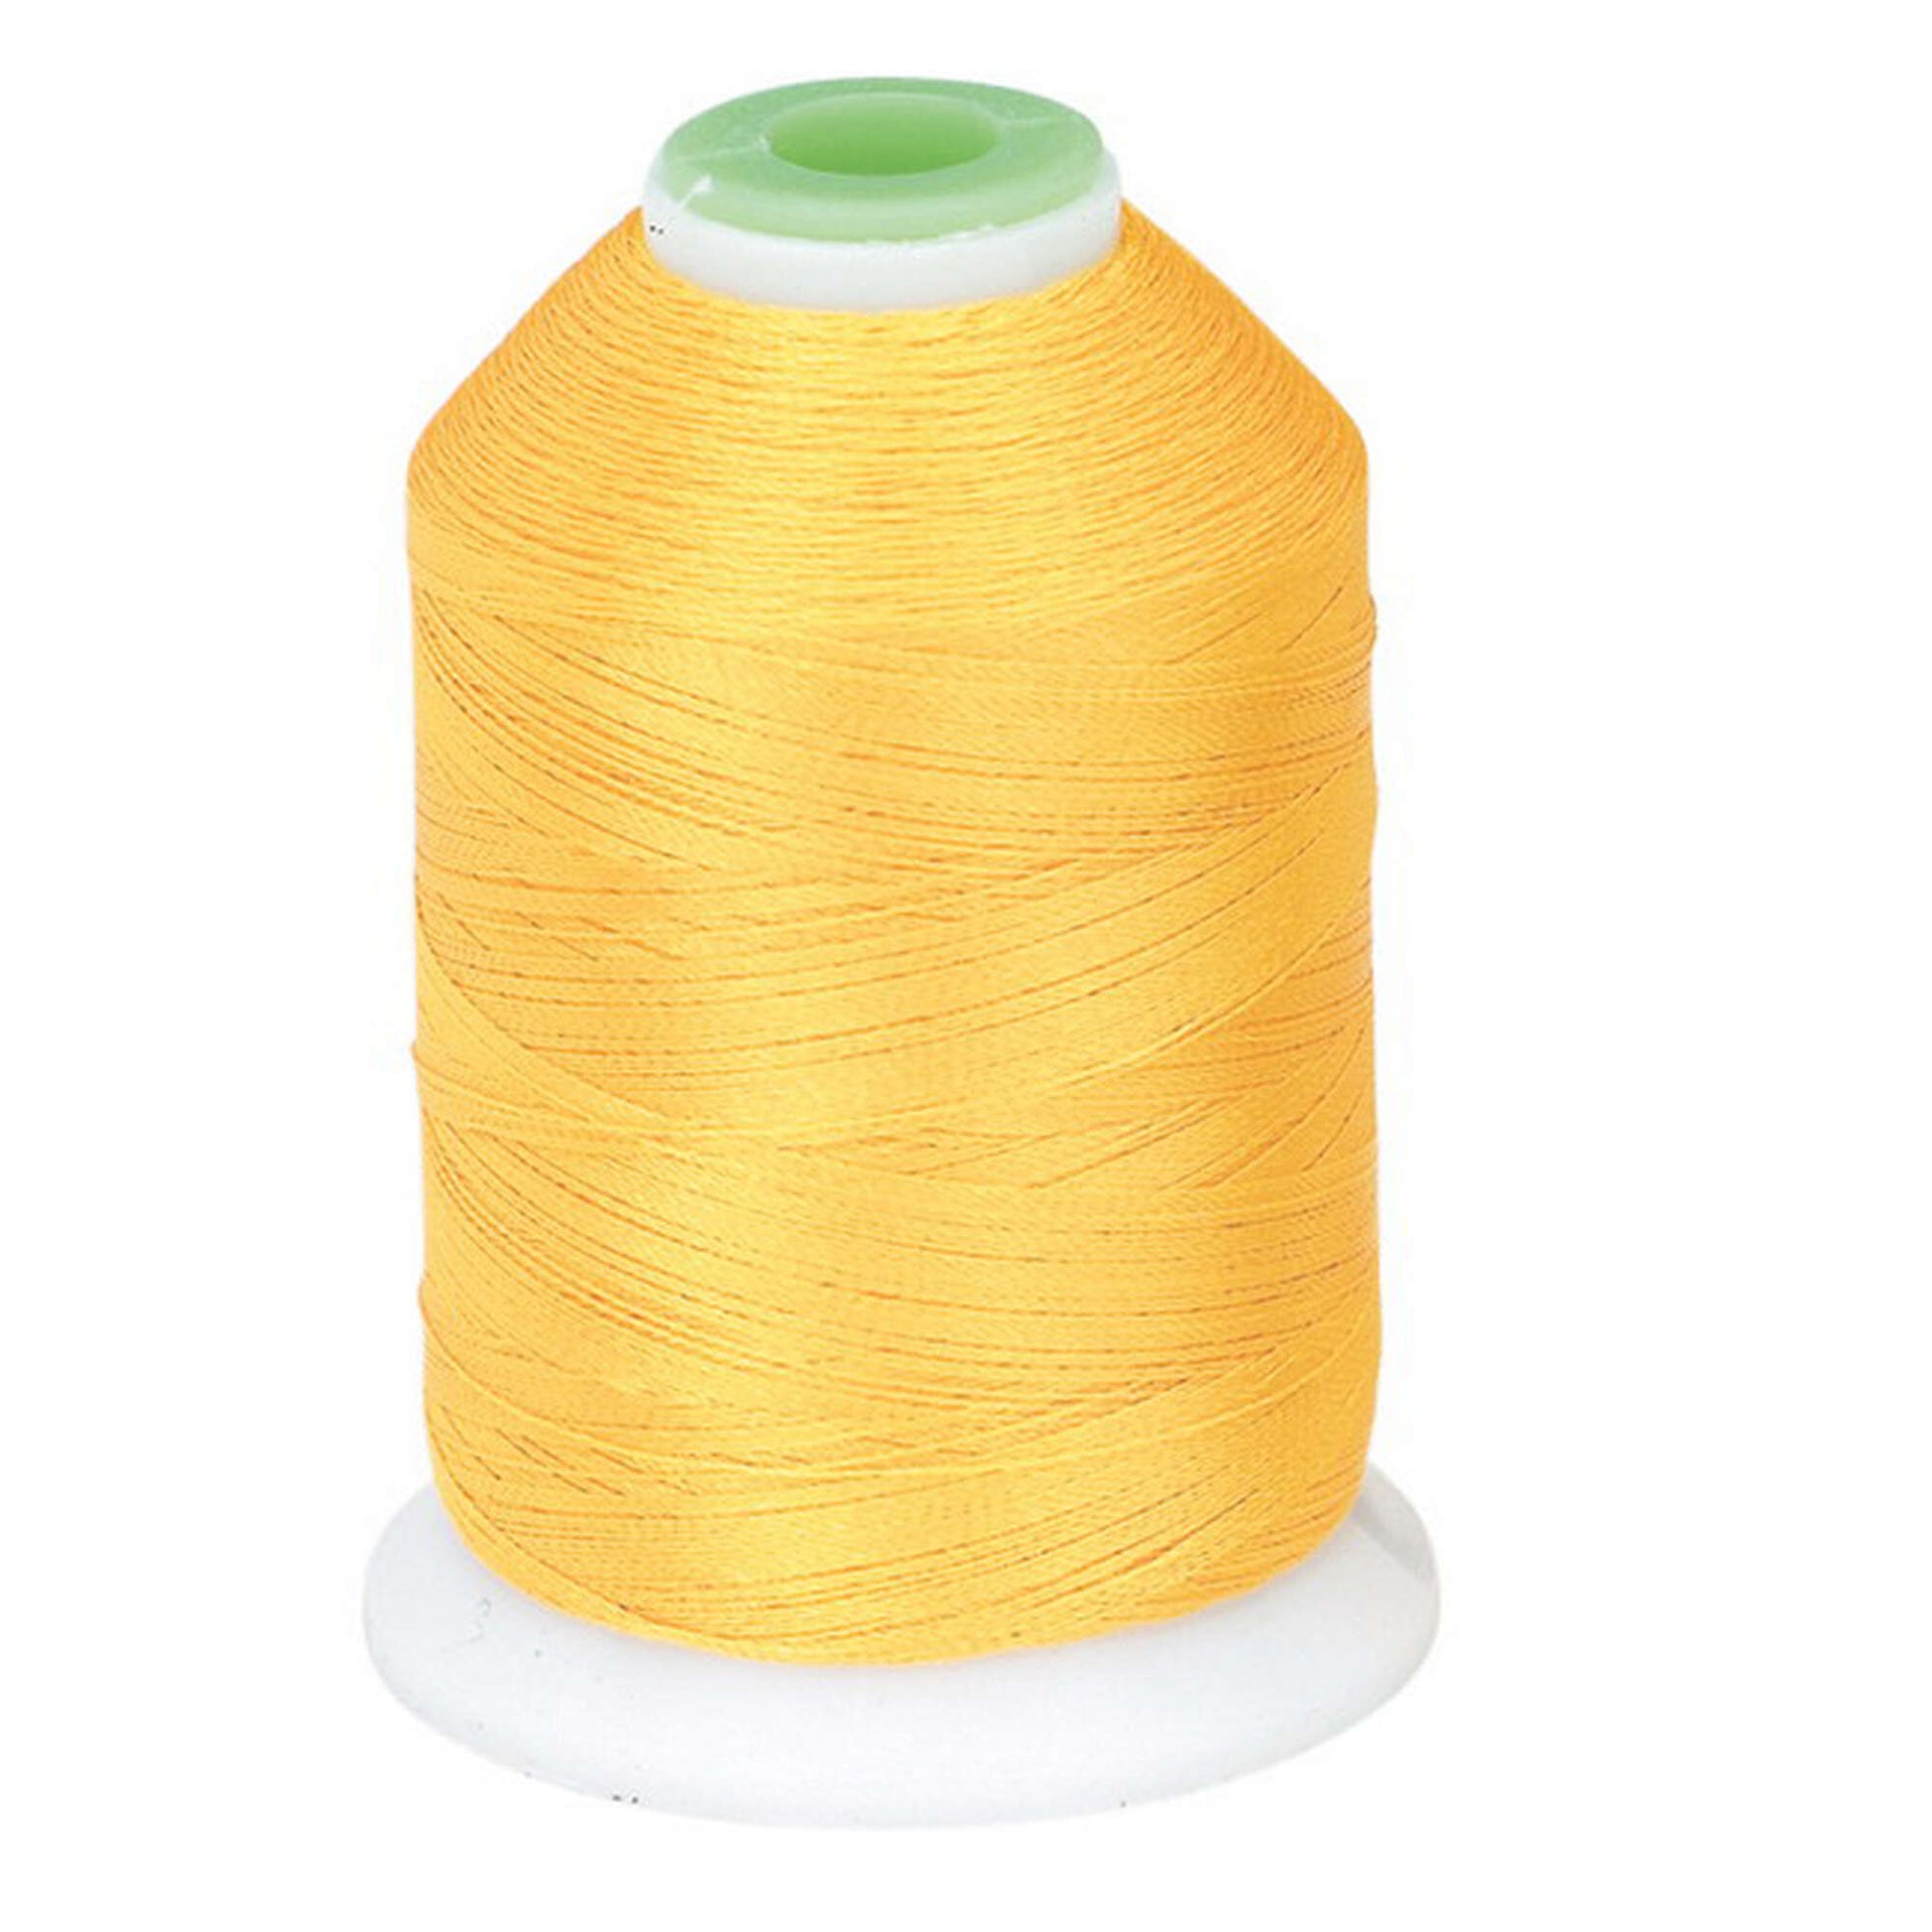 Coats & Clark Machine Embroidery Thread (1100 Yards) Spark Gold